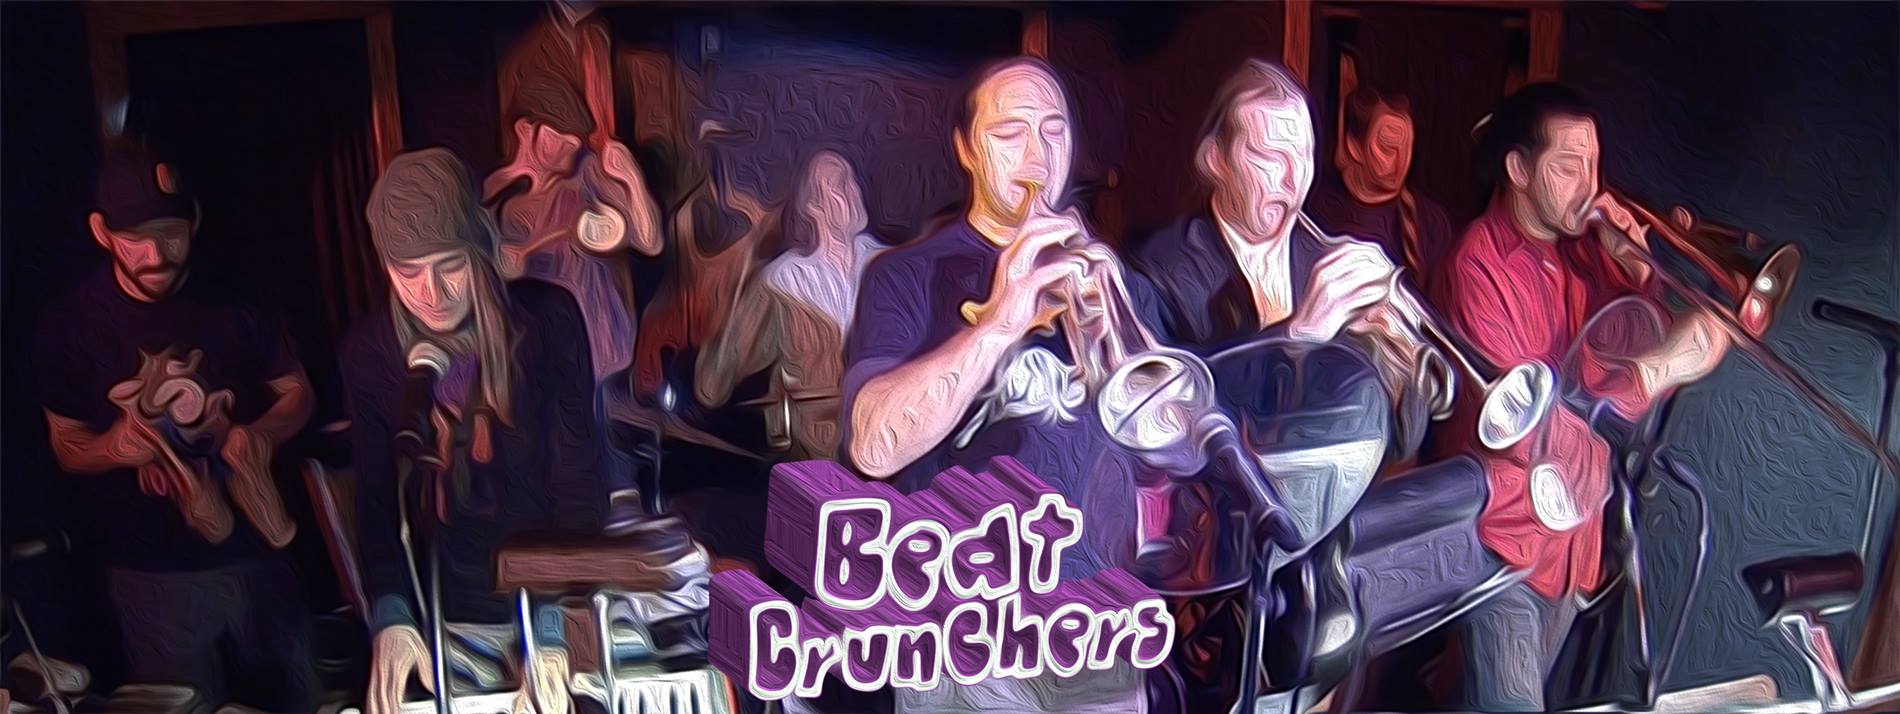 Beat-Crunchers